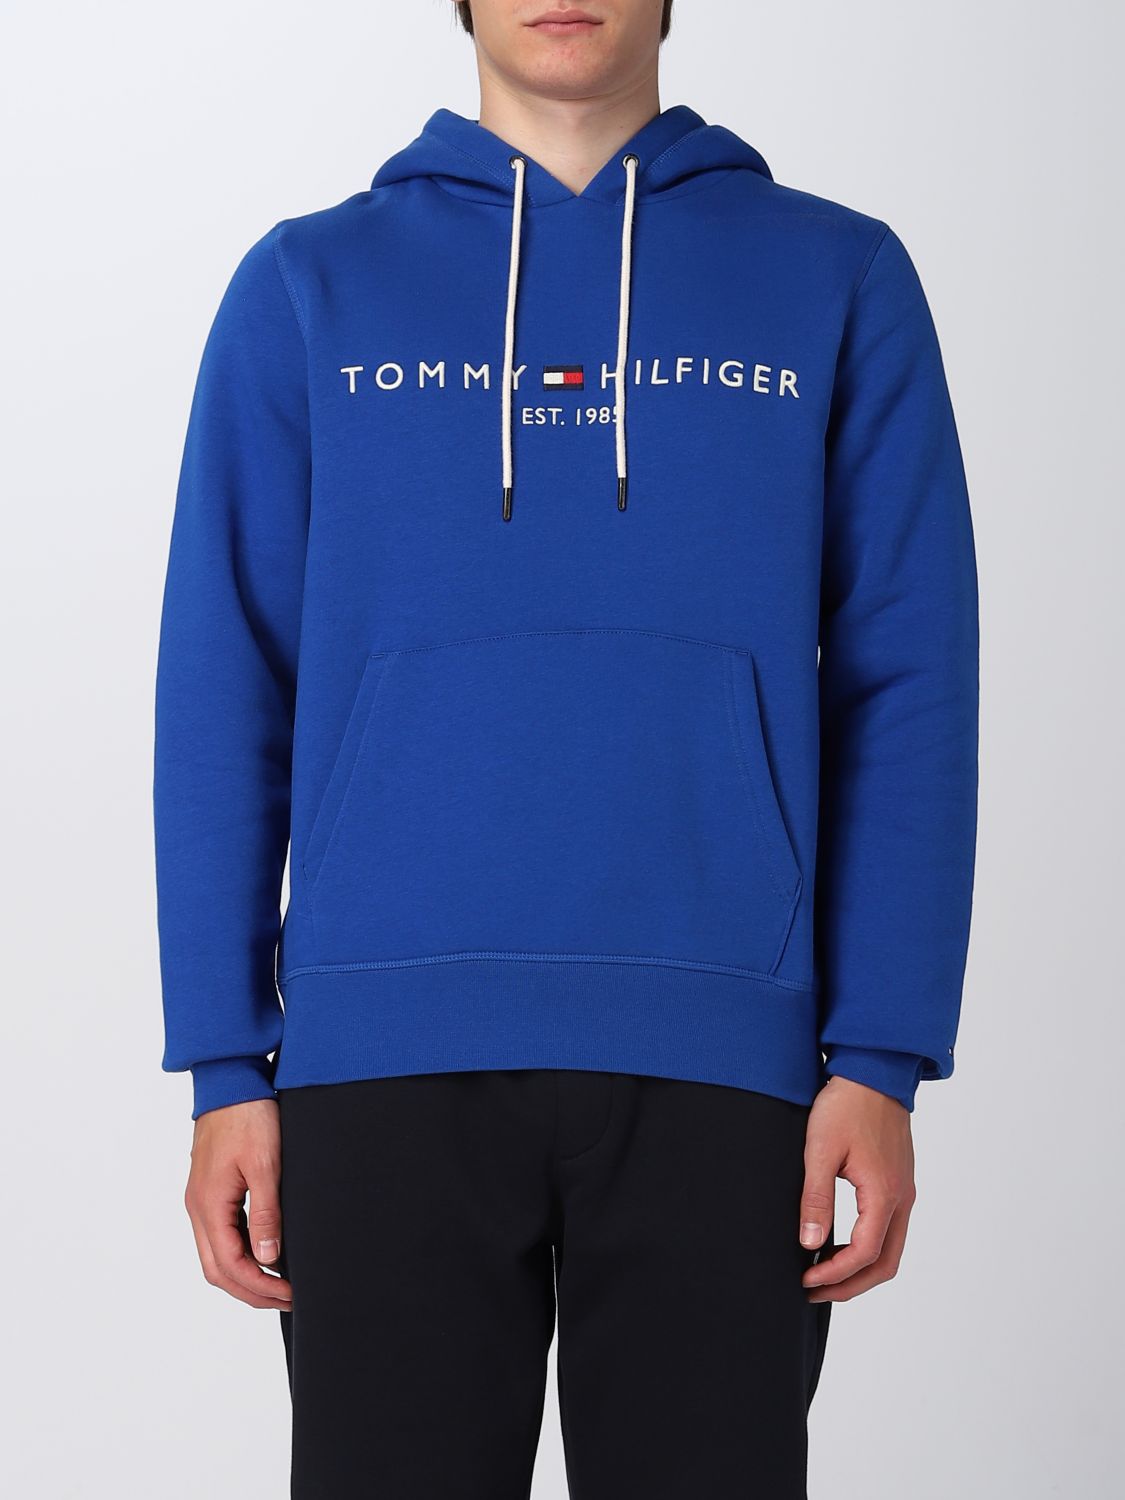 HILFIGER: sweatshirt for man - Royal Blue | Tommy Hilfiger sweatshirt MW0MW11599 online at